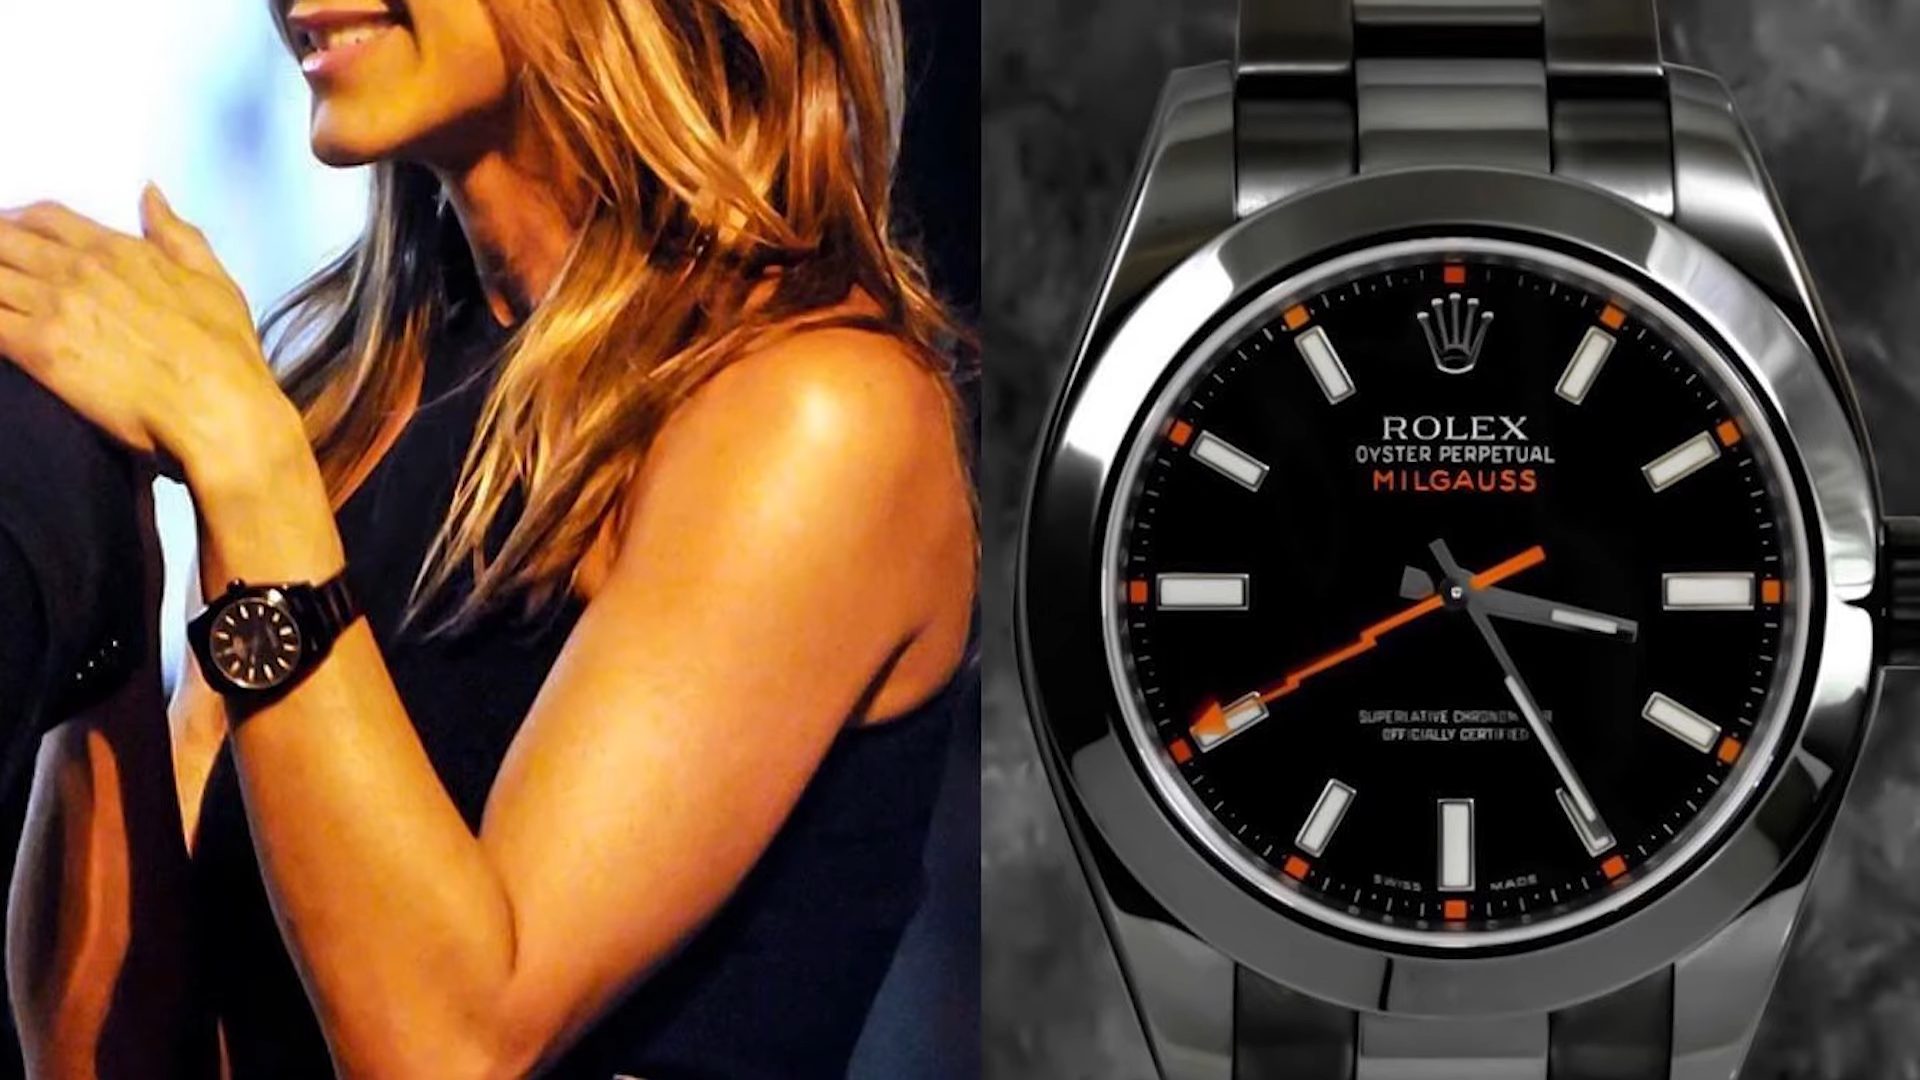 Jennifer Aniston wearing Rolex